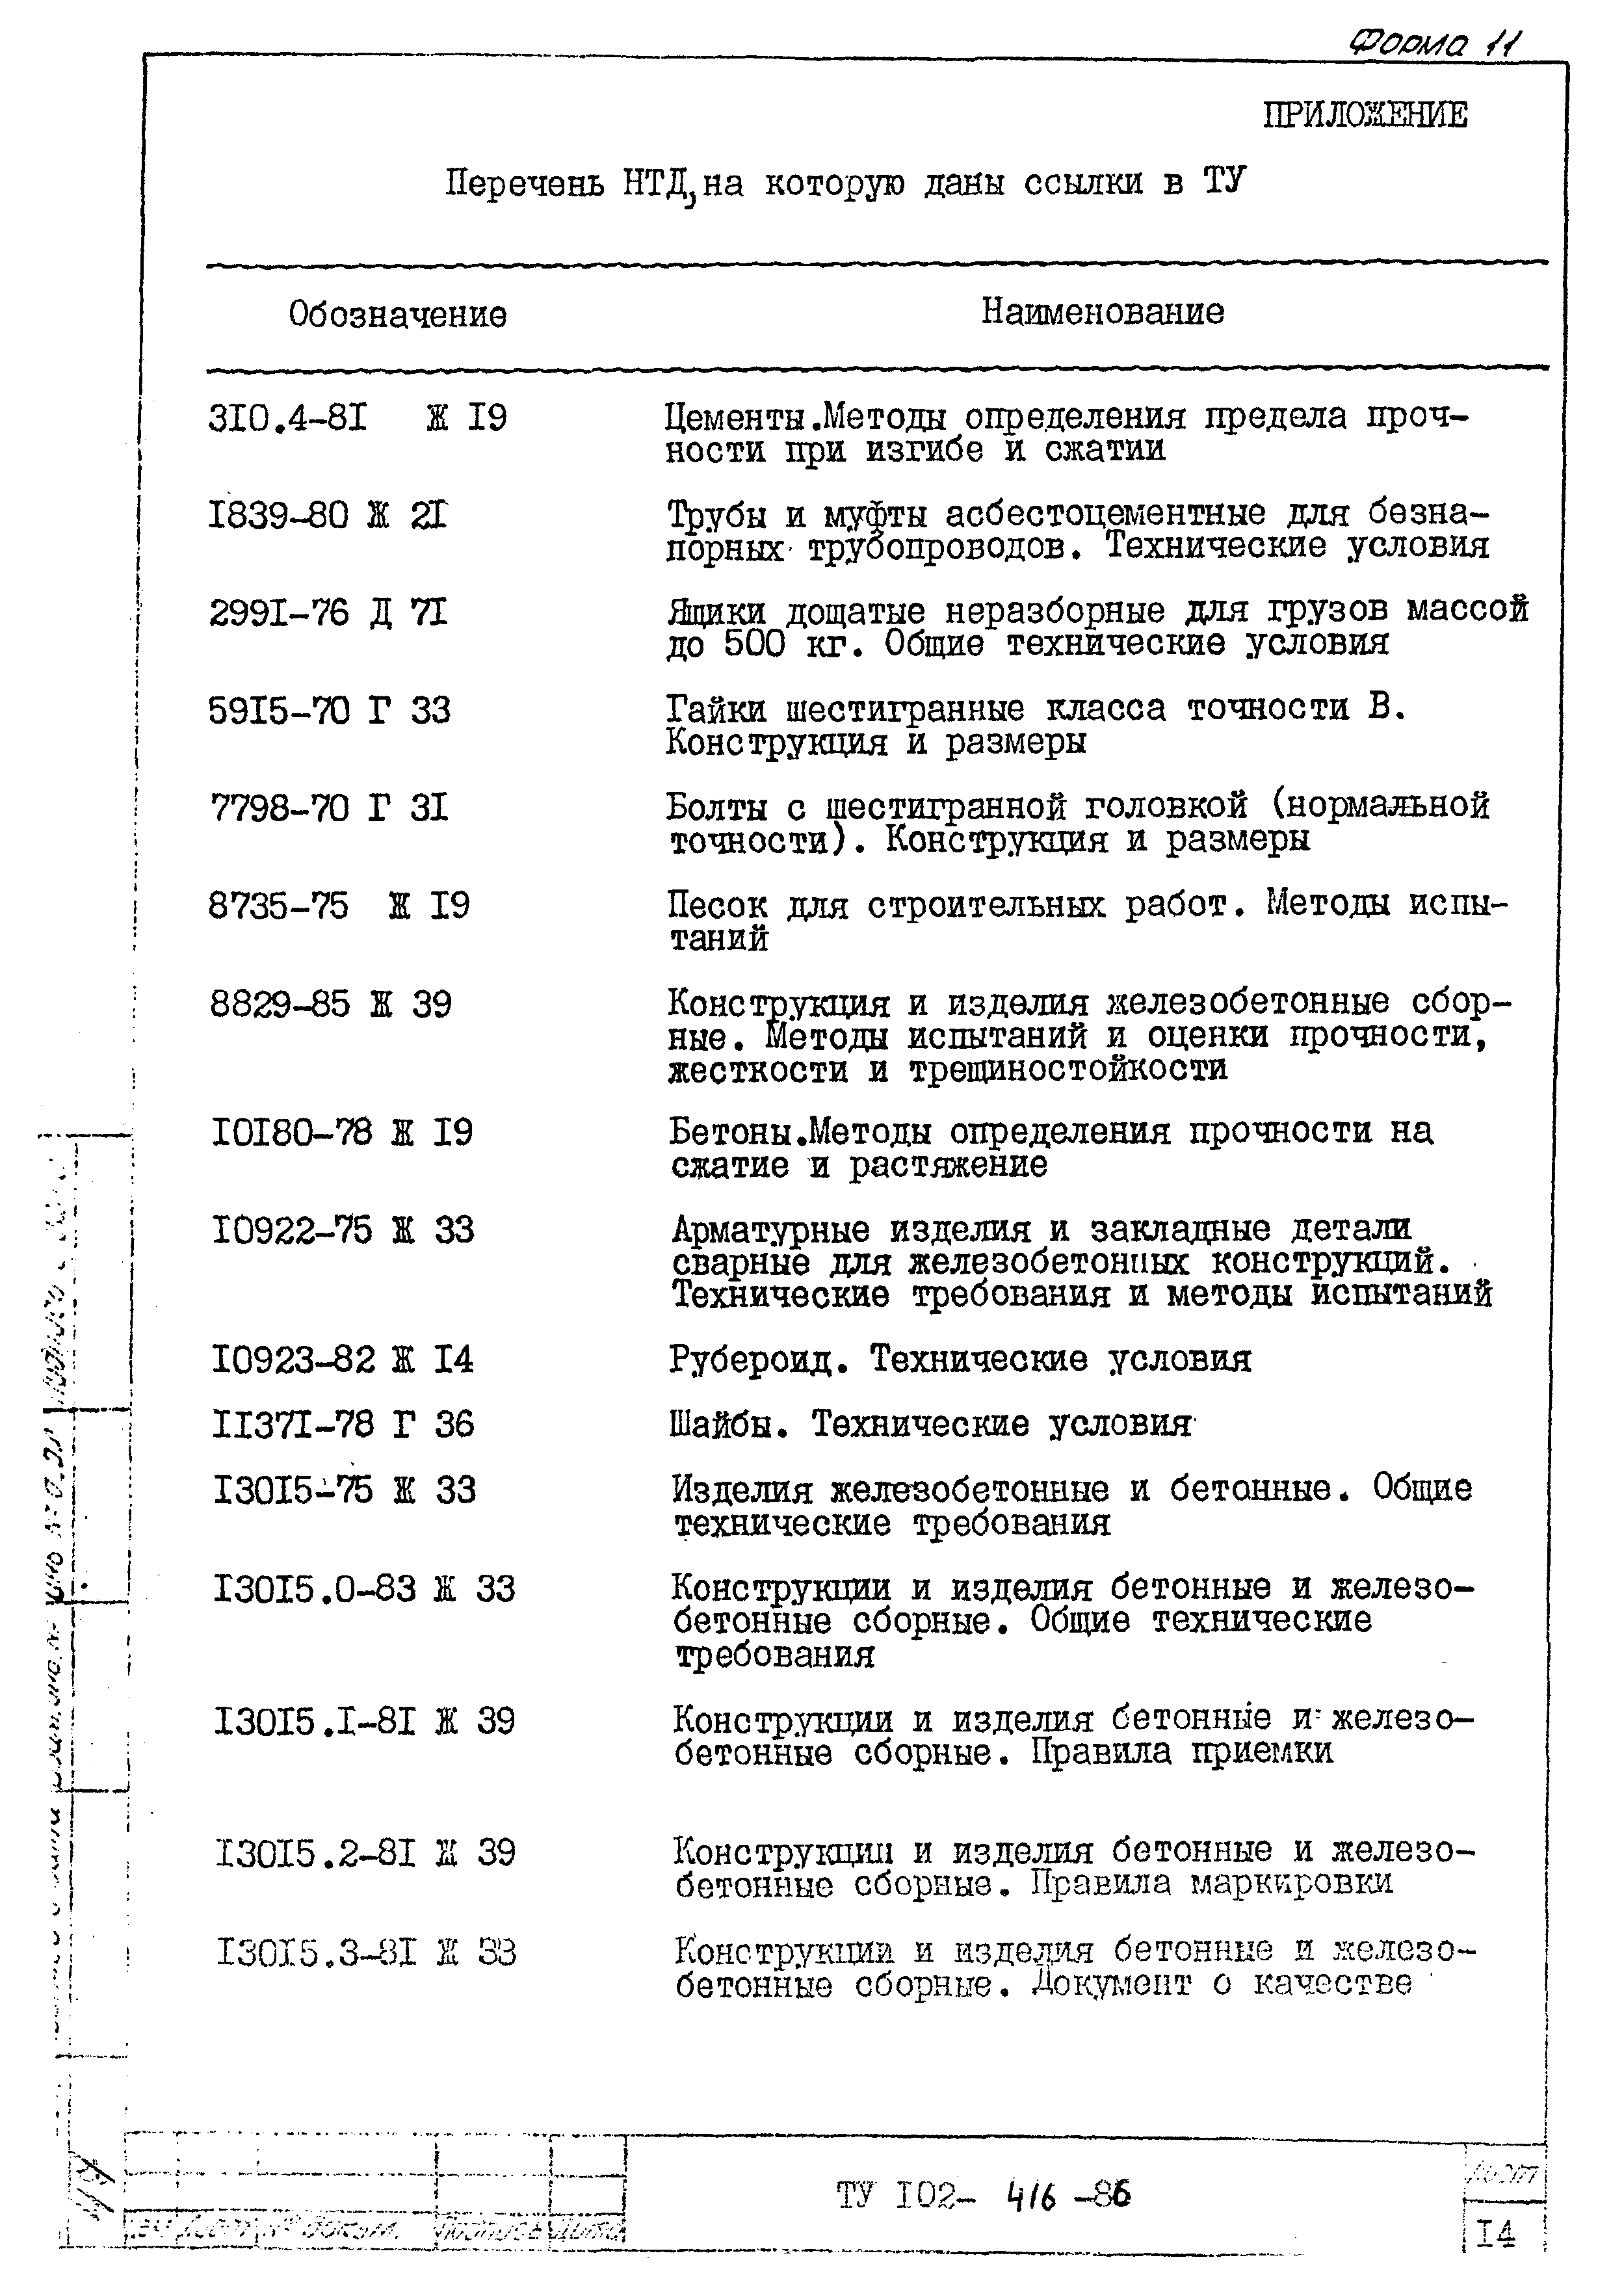 ТУ 102-416-86